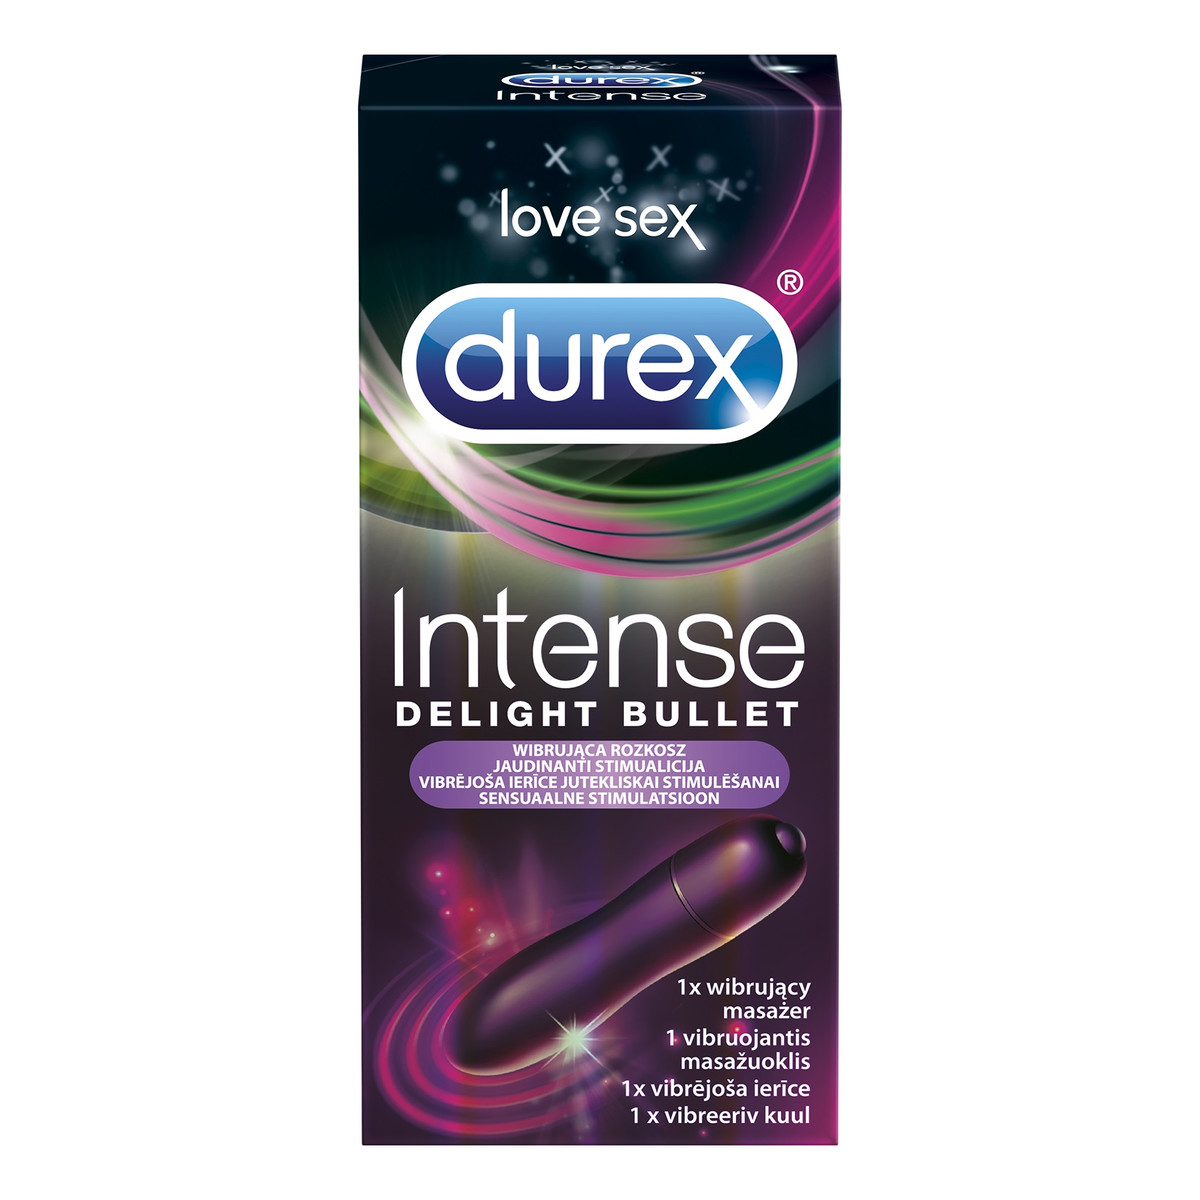 Durex Intense Delight Bullet wibrujący masażer